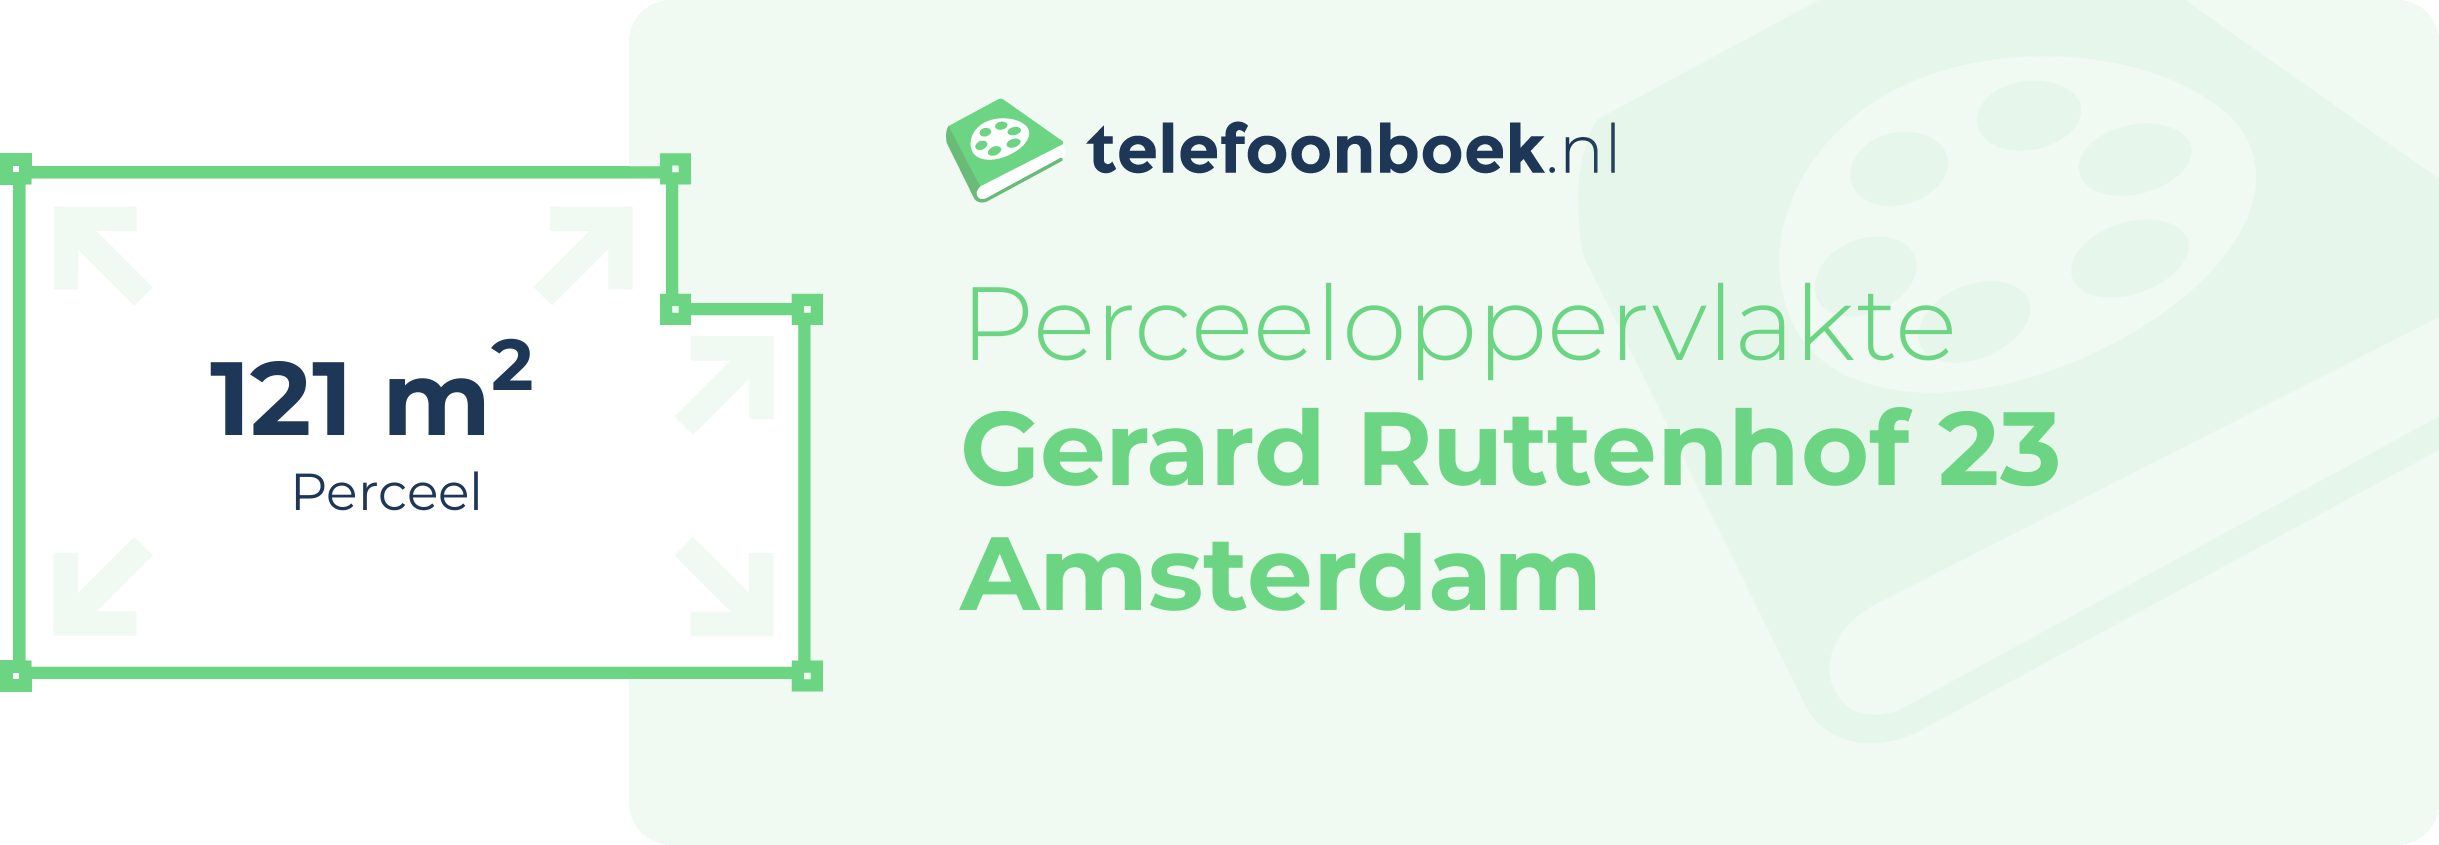 Perceeloppervlakte Gerard Ruttenhof 23 Amsterdam